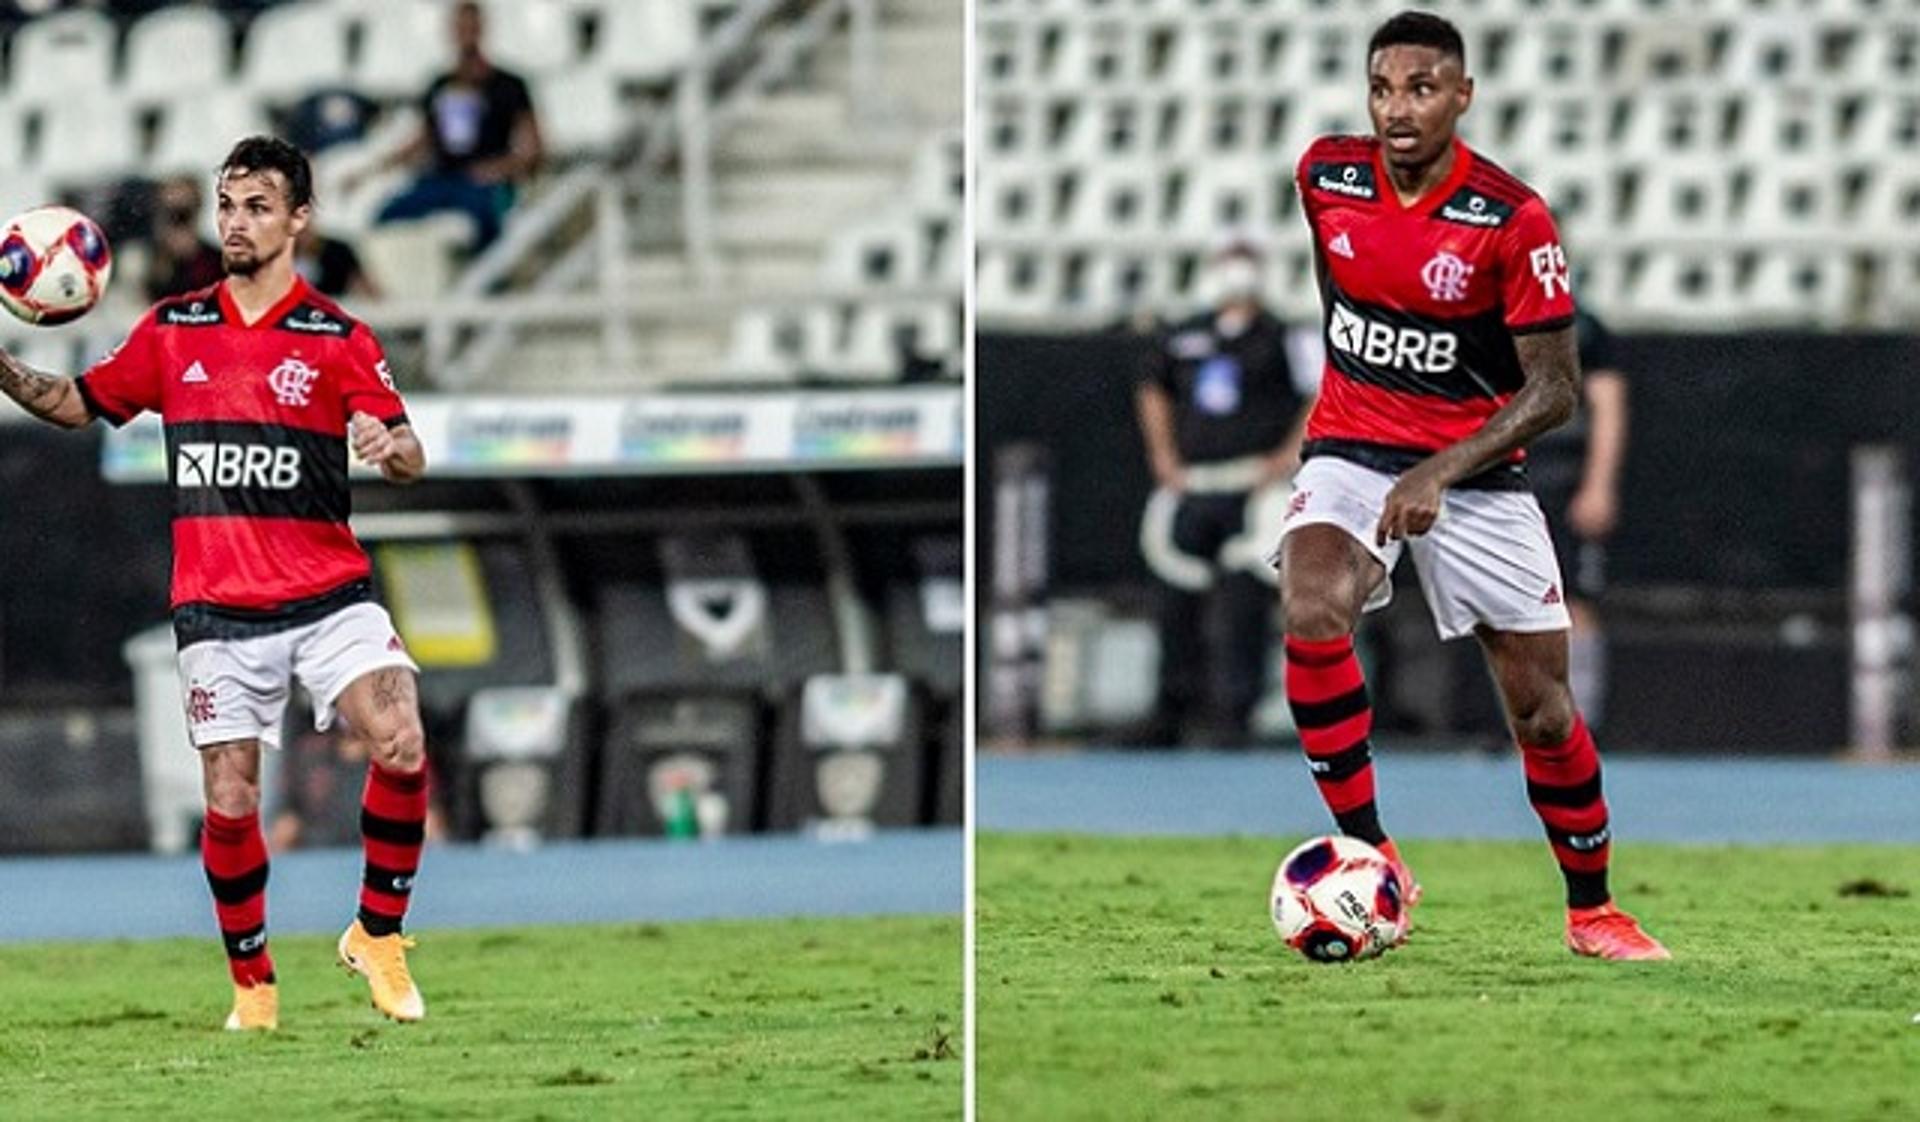 Michael e Vitinho - Flamengo